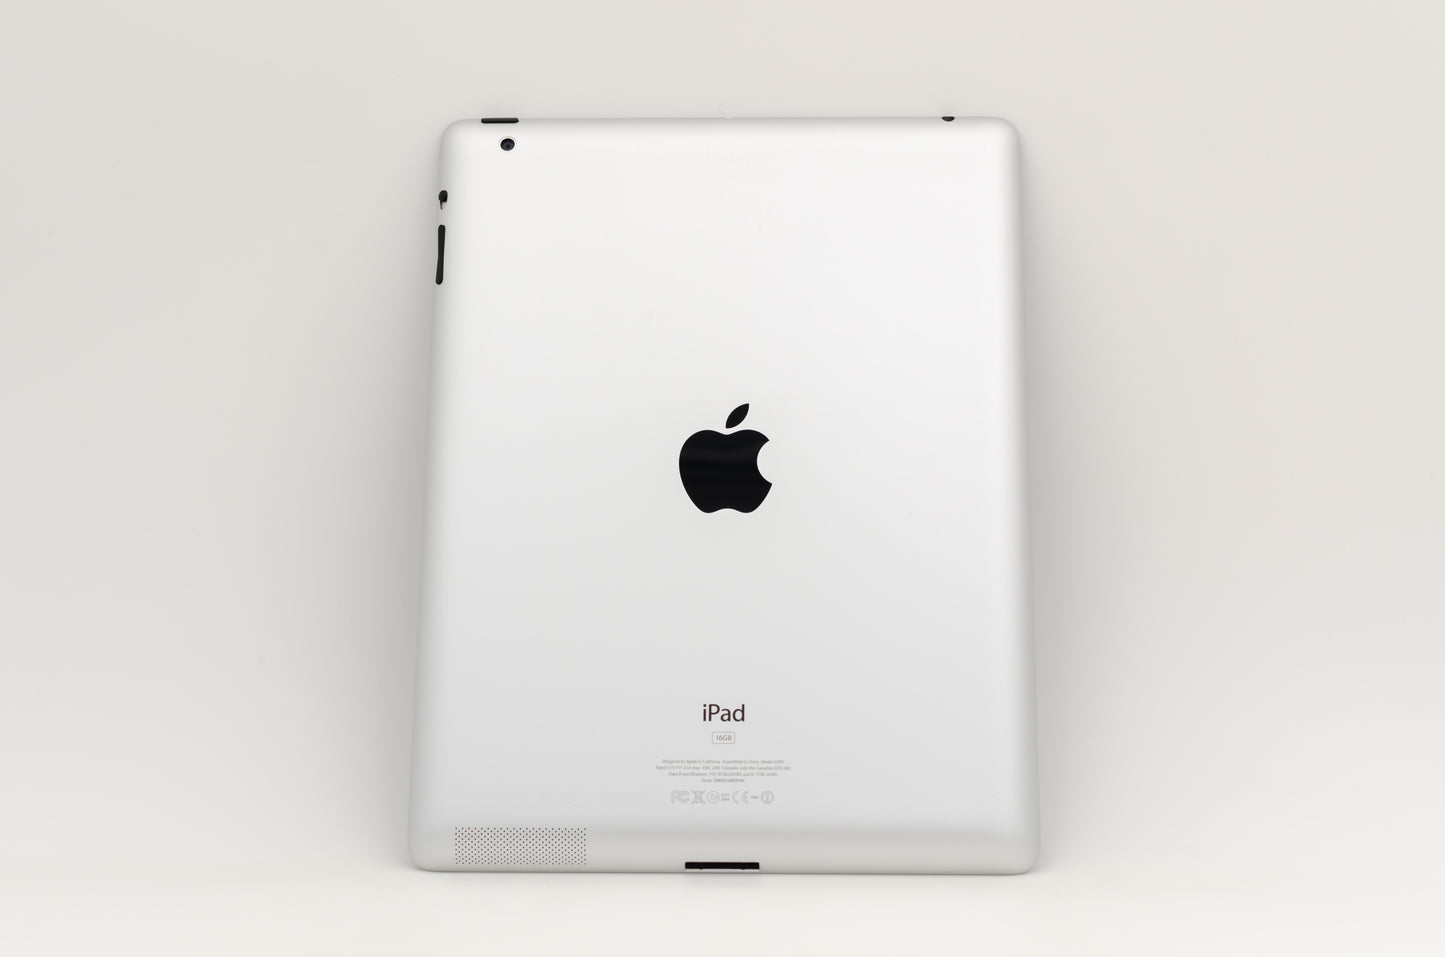 apple-2012-9.7-inch-ipad-2-a1395-silver/white-2